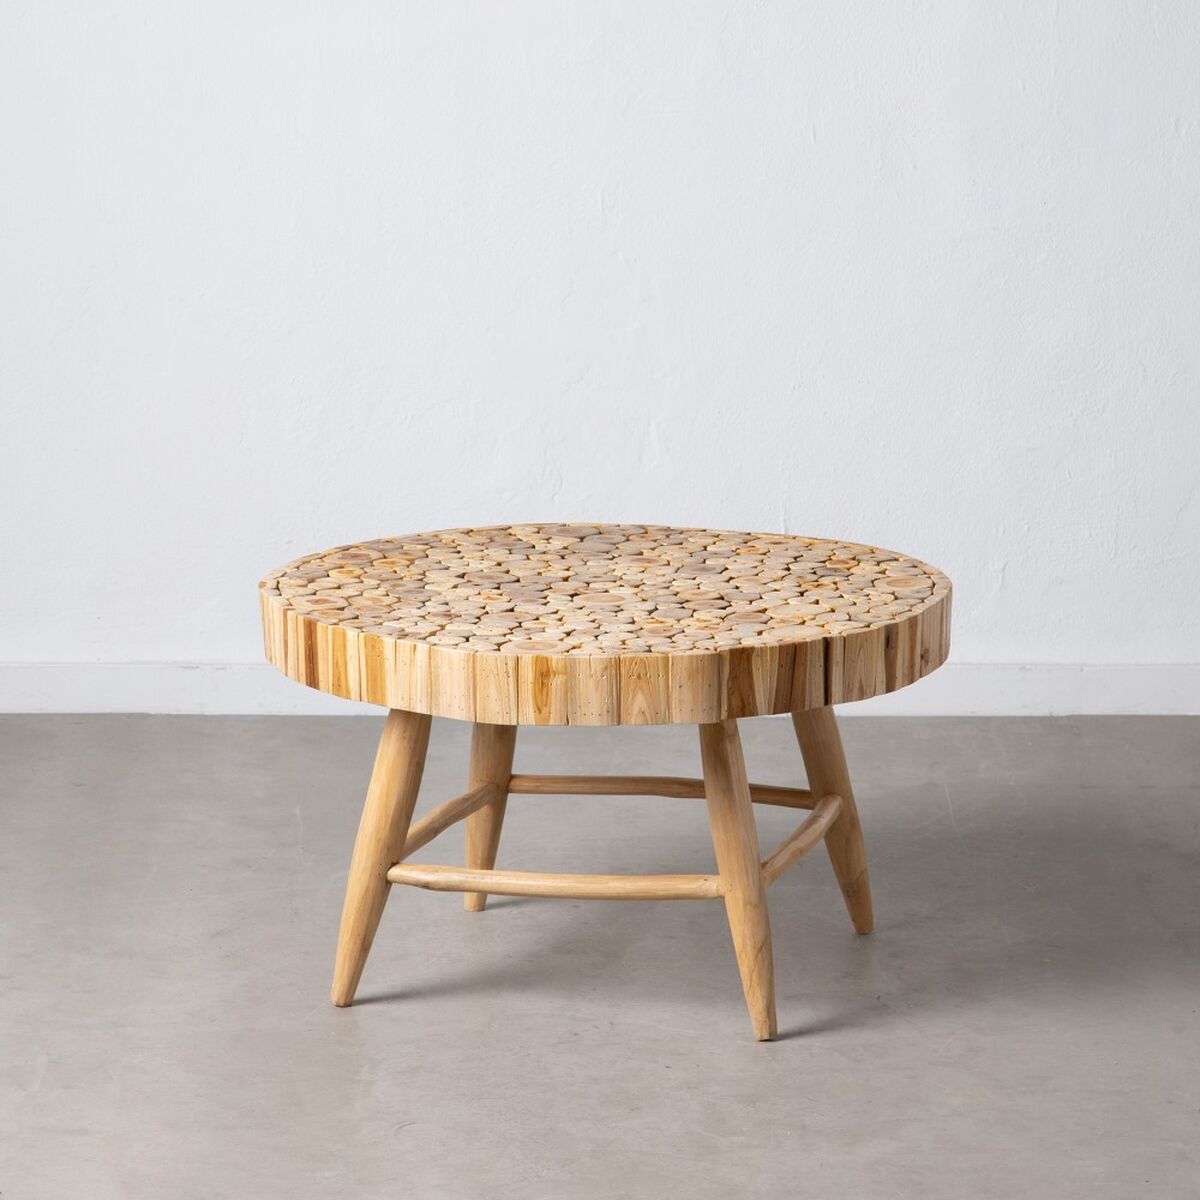 Centre Table in Teak Wood (80 x 80 x 45 cm)